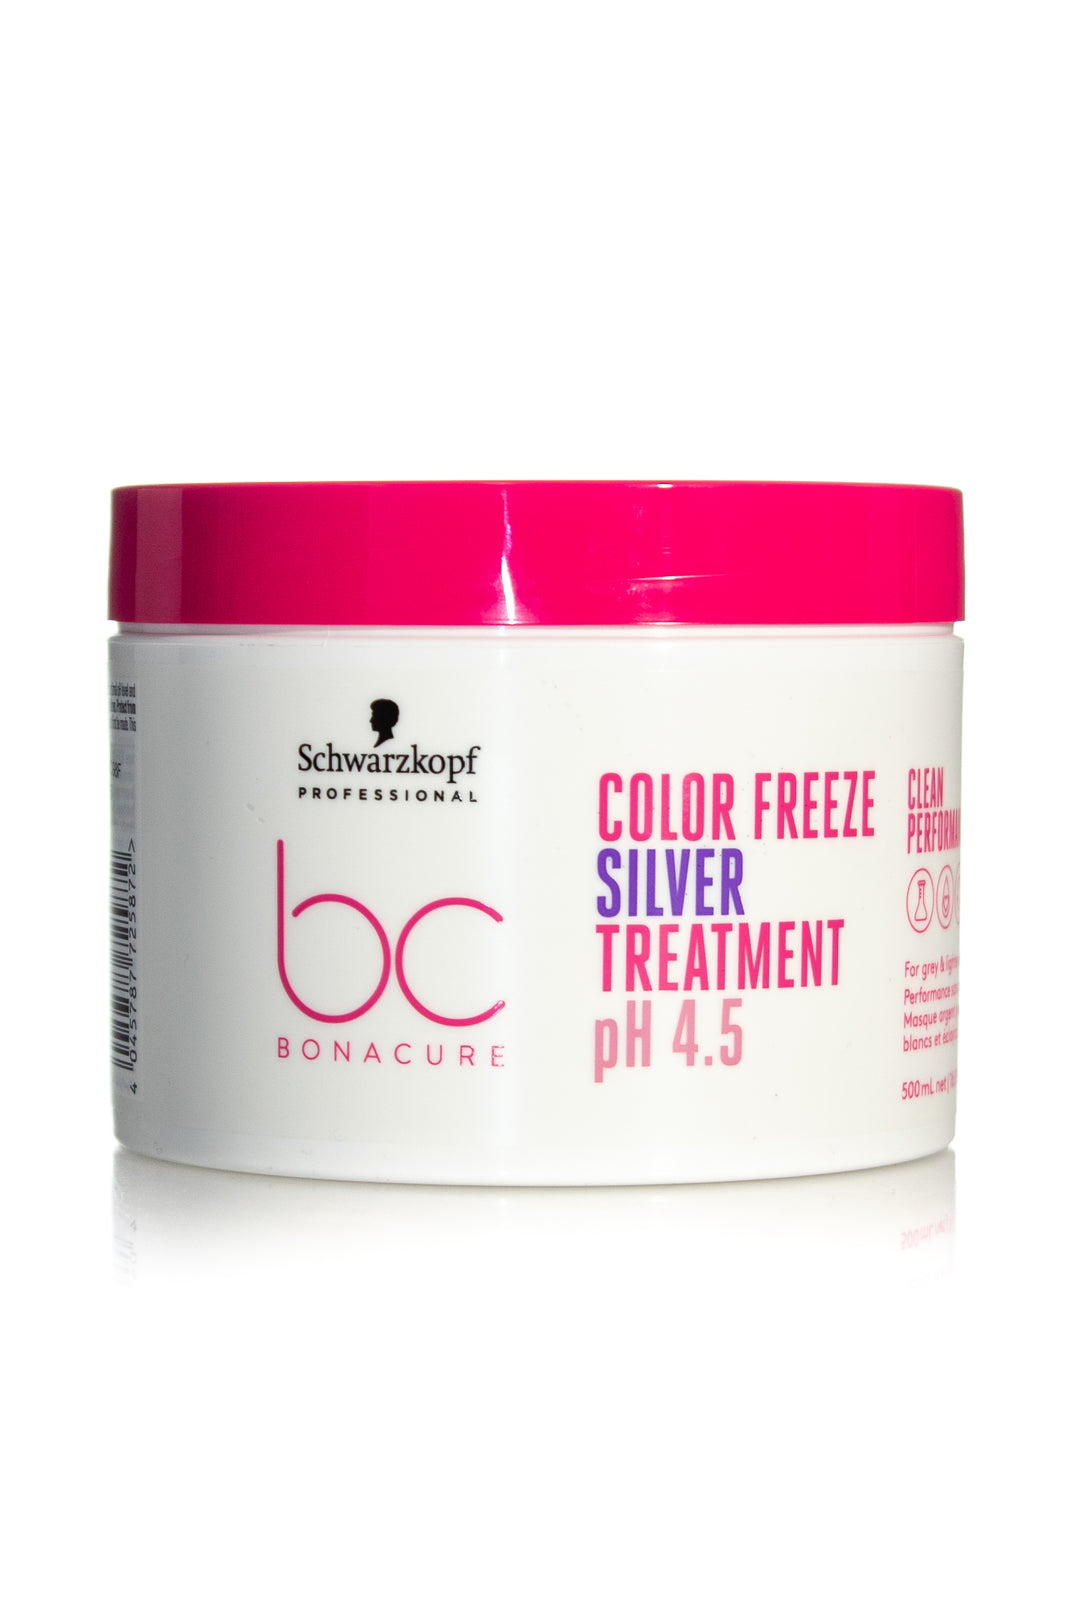 Schwarzkopf Bonacure Color Freeze Silver Treatment pH 4.5